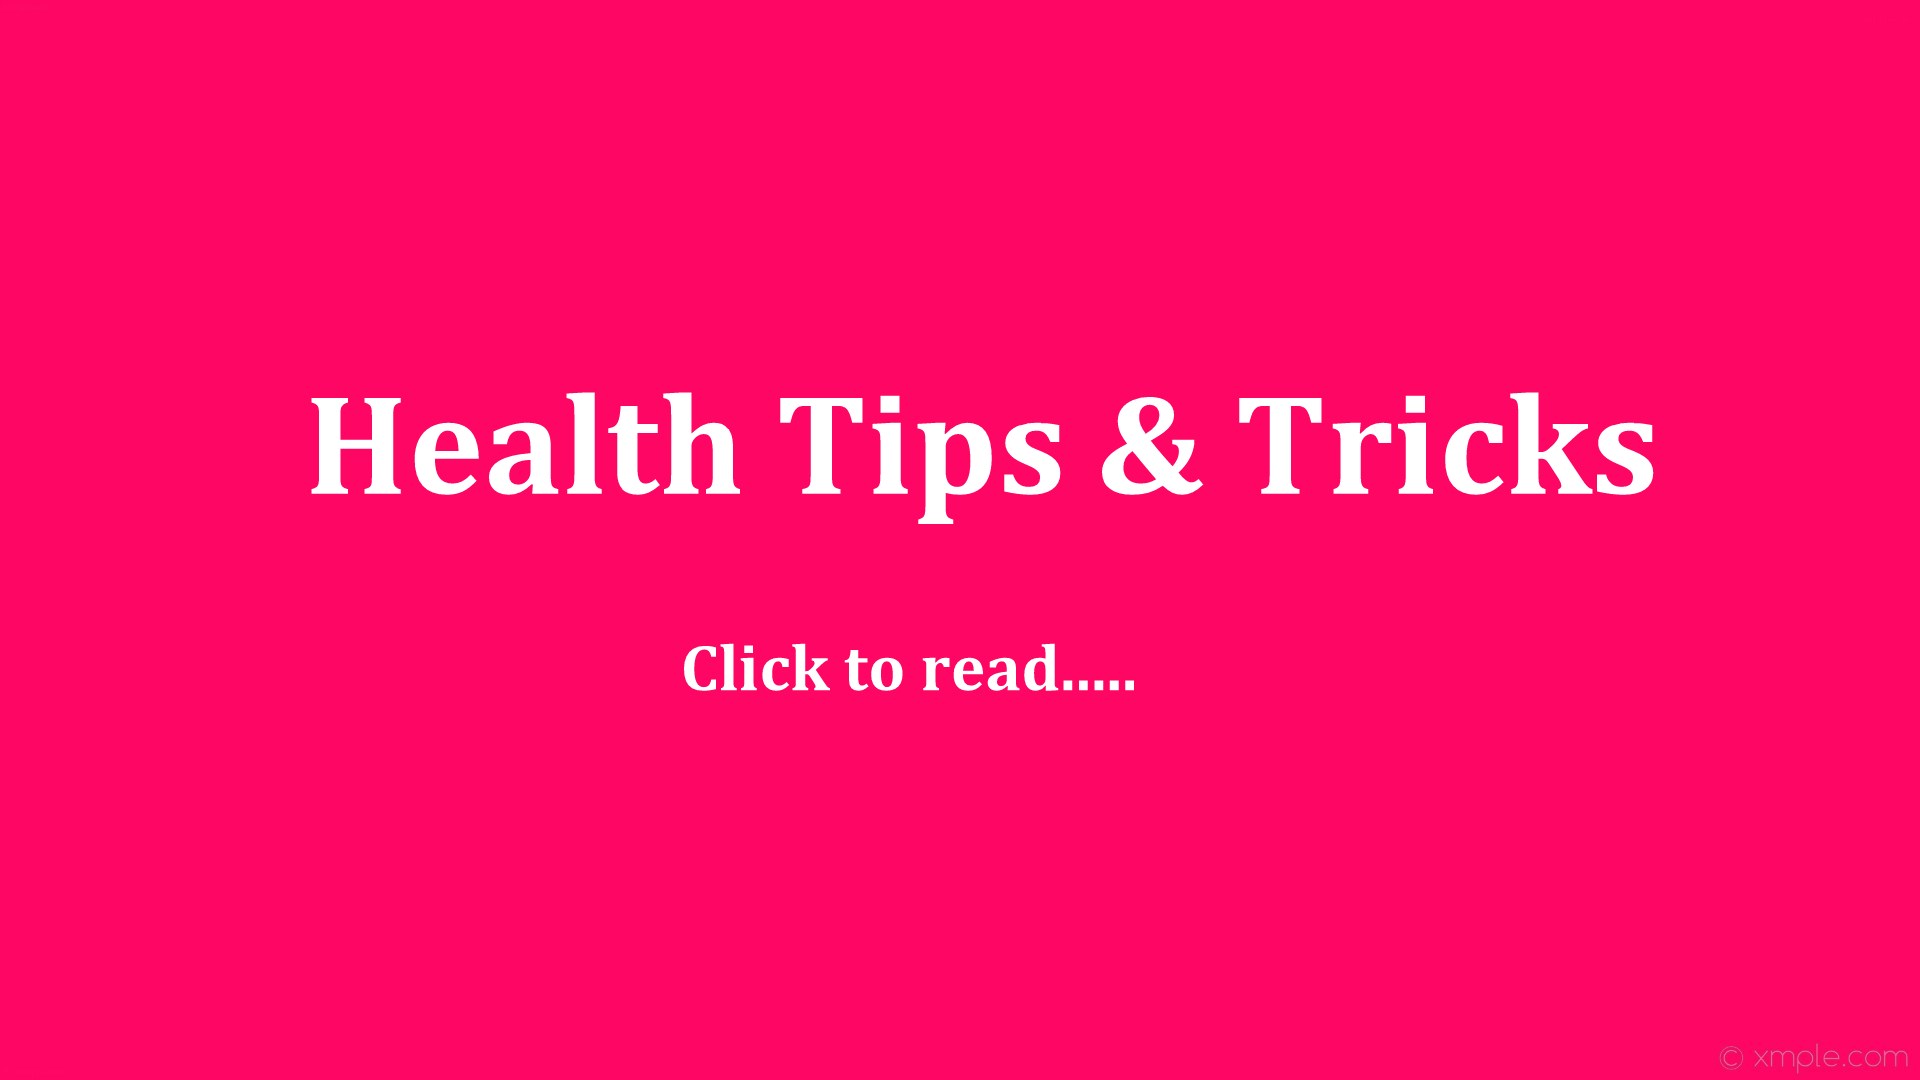 Wellness tips health care tips